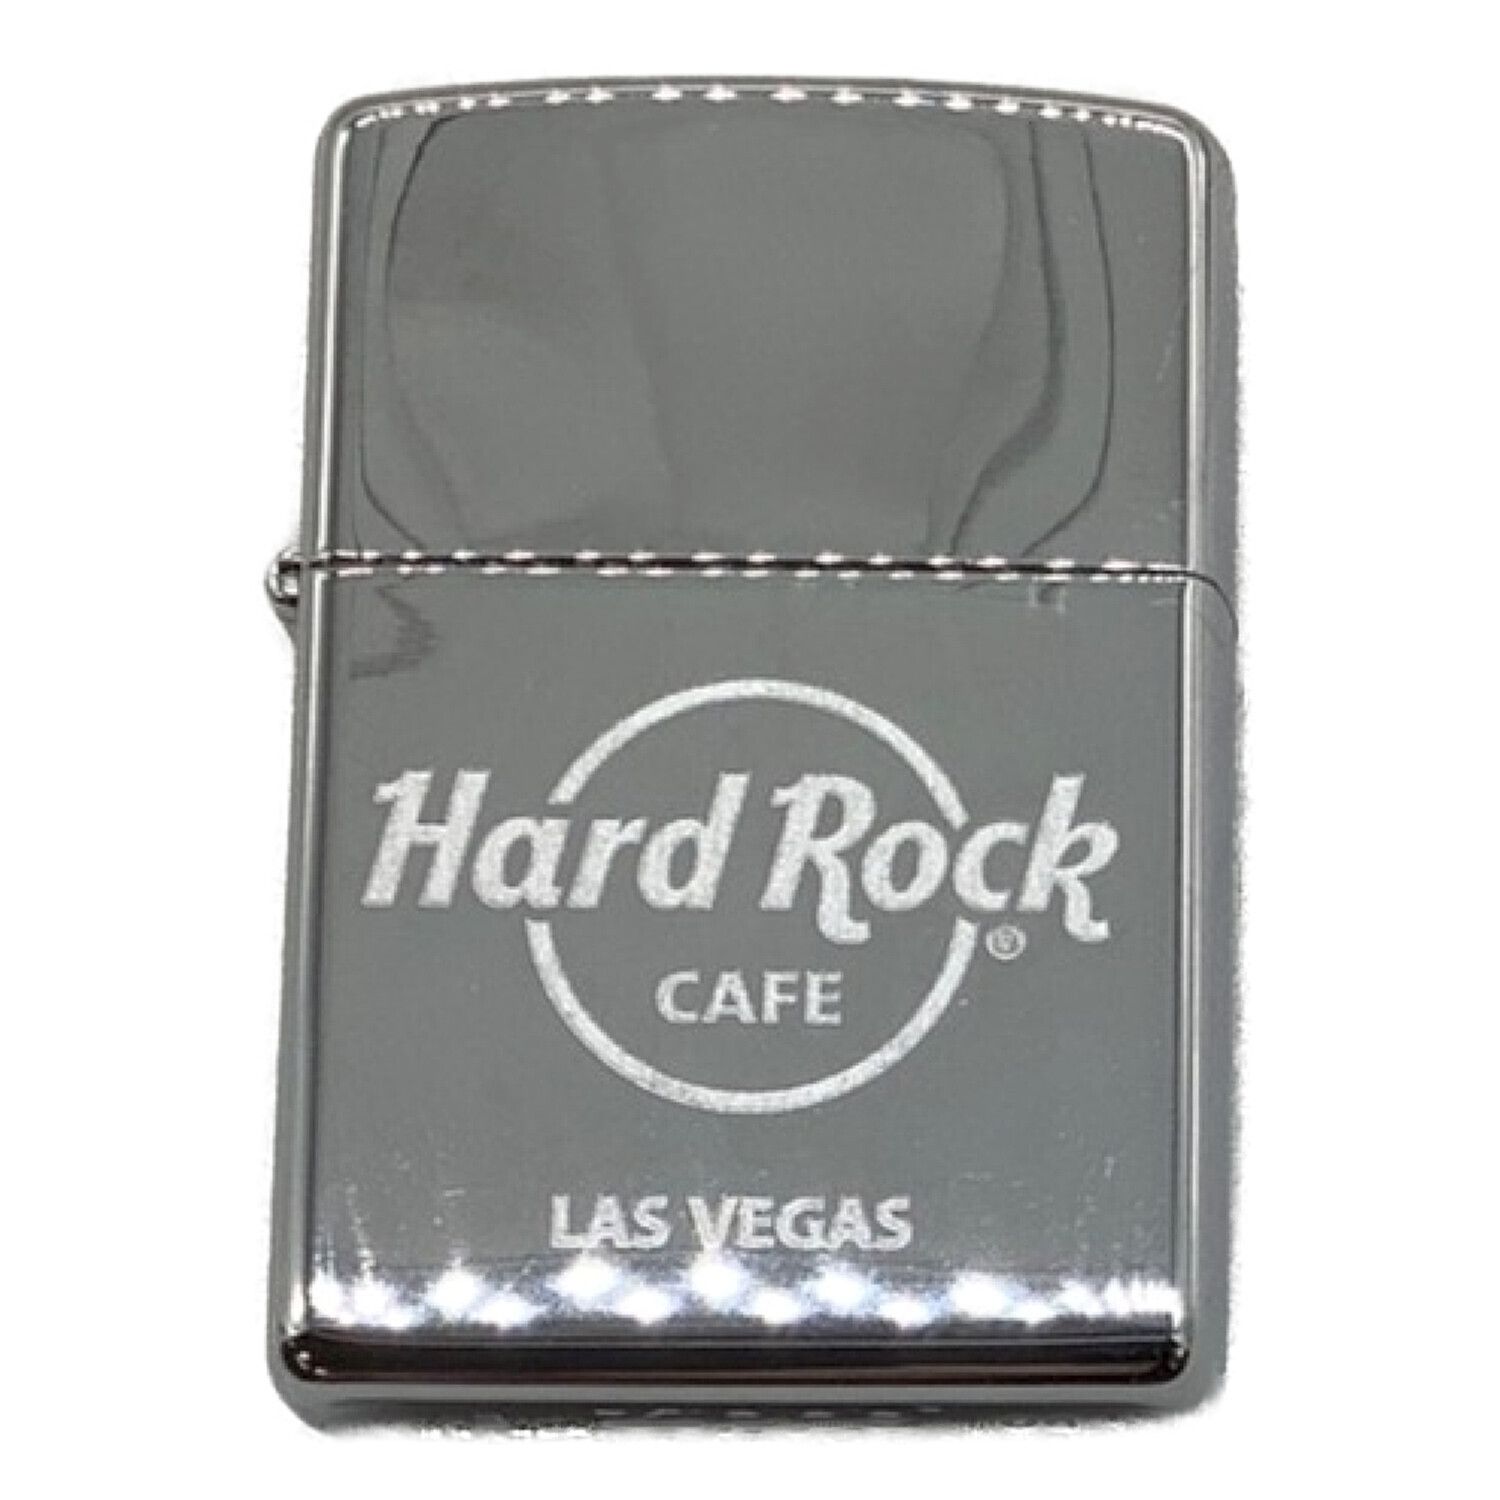 ZIPPO (ジッポ) オイルライター Hard Rock cafe LAS VEGAS 2006年製 ...